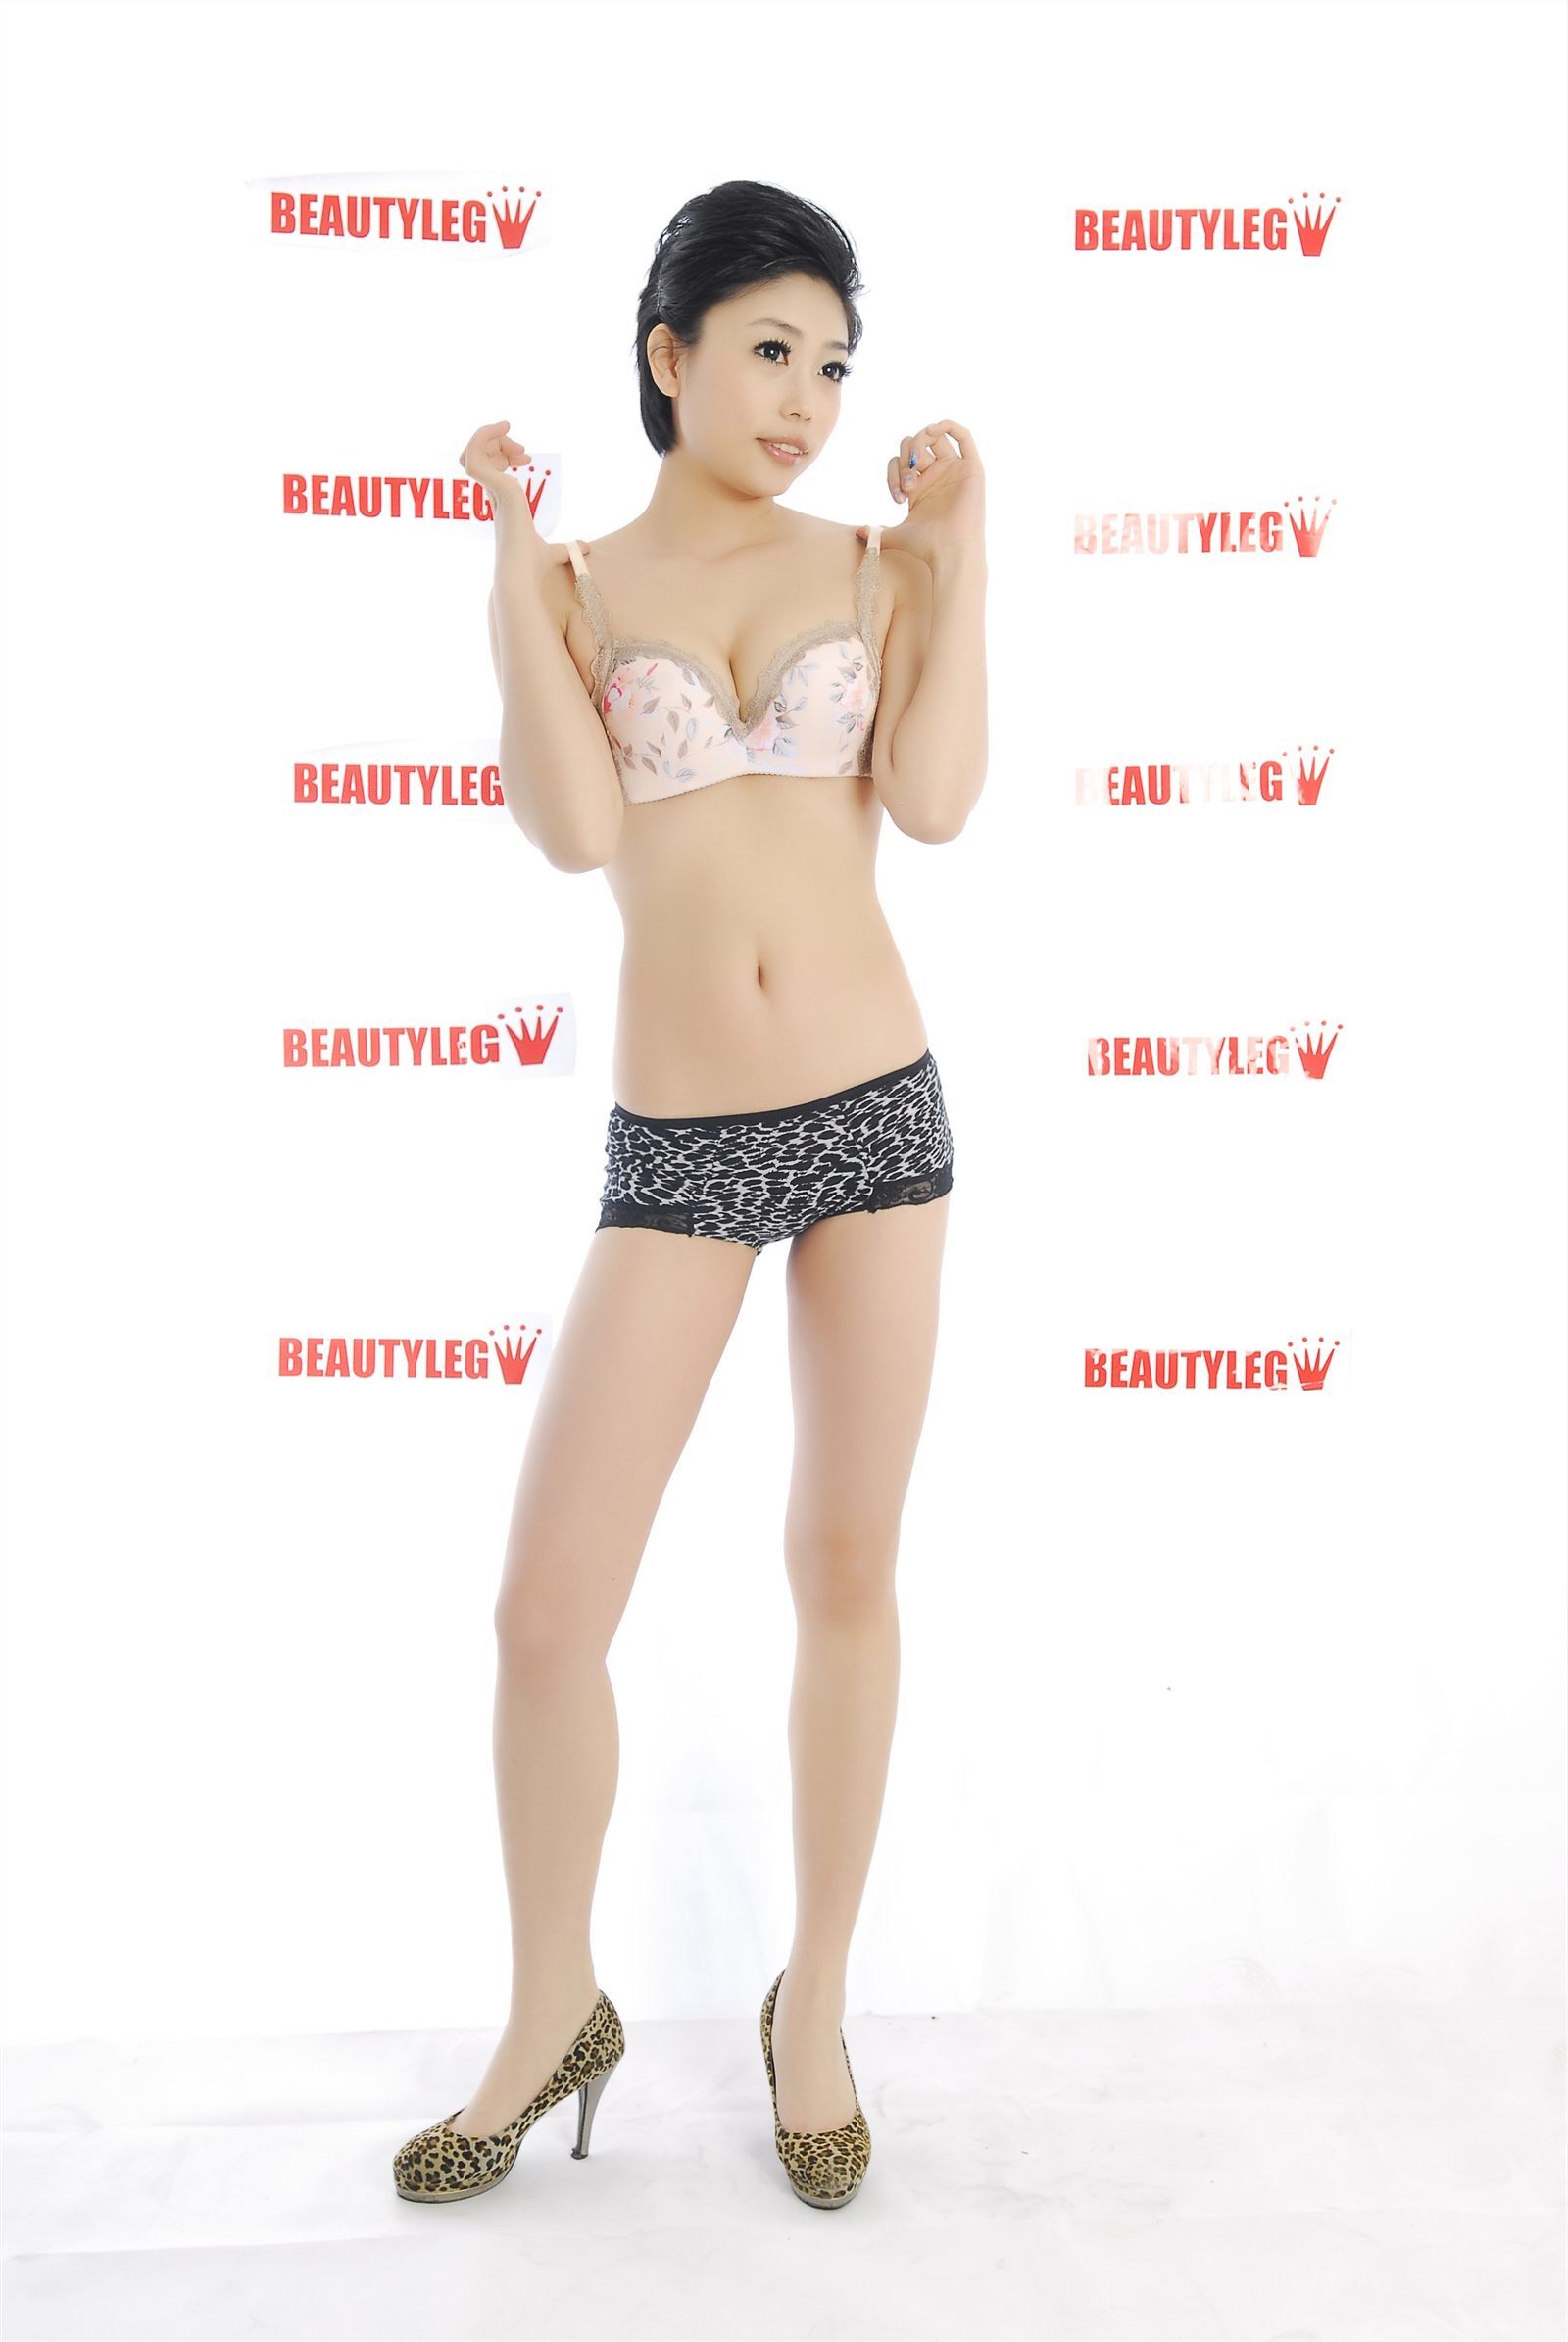 BeautyLeg underwear photo model set (3) high definition model underwear photos